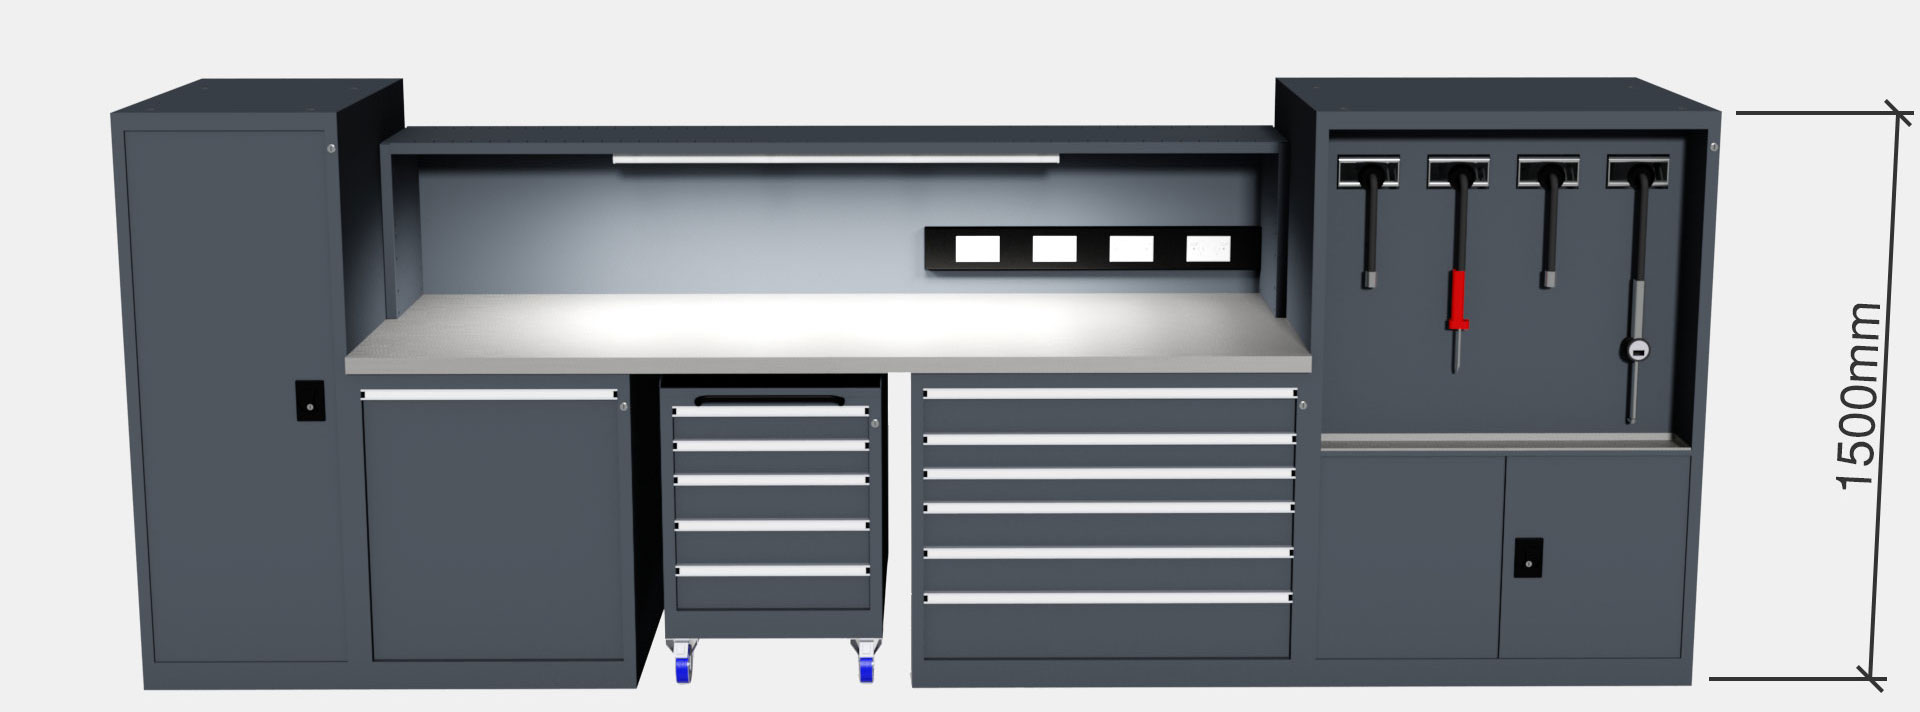 Automotive Workstations Medium Profile, Image 1